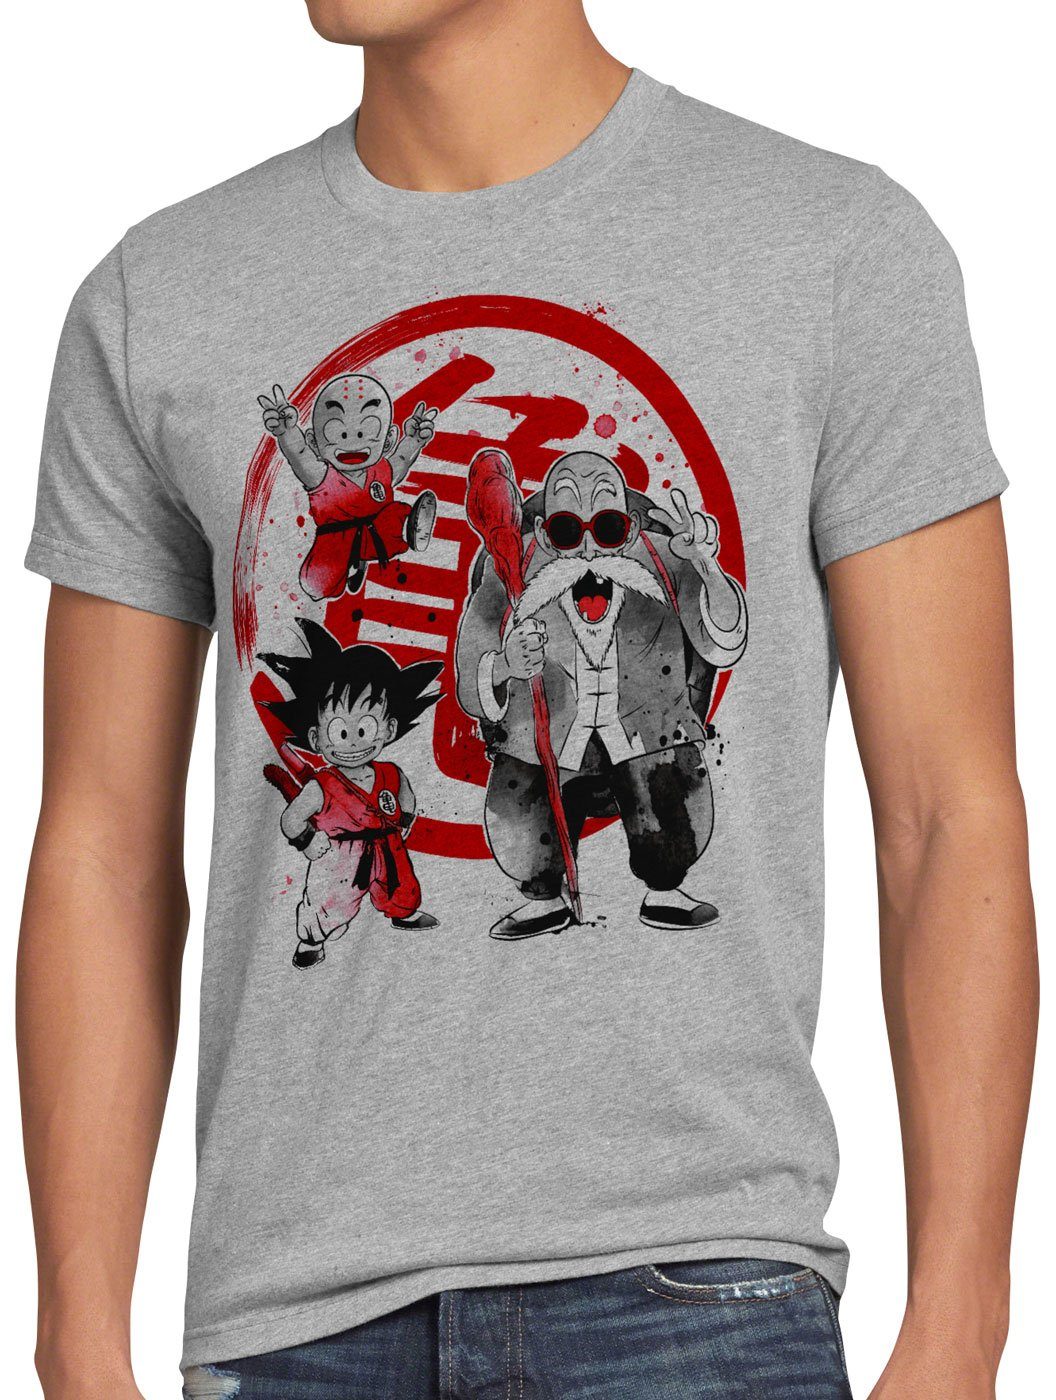 Gallic Struggle Beam Ball grau style3 Print-Shirt meliert Energie Herren Dragon Crew T-Shirt